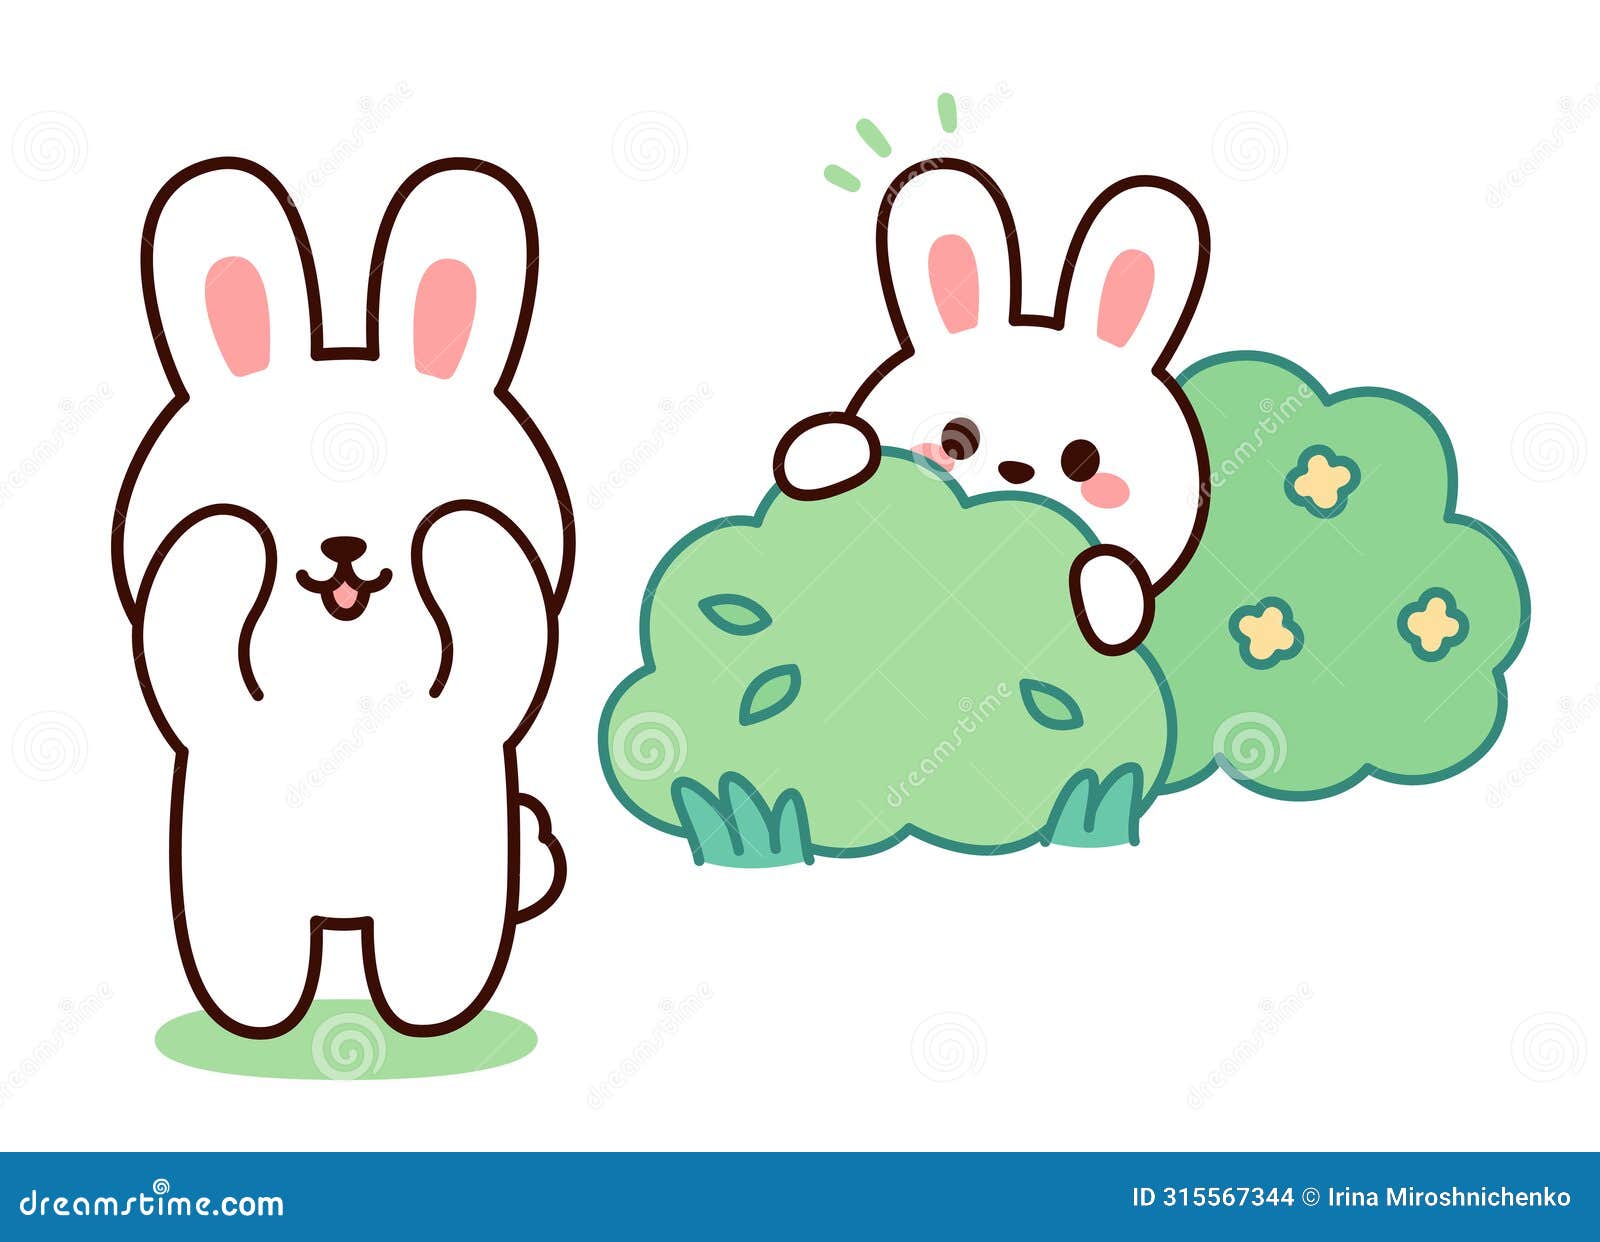 cute cartoon rabbits playing hide and seek